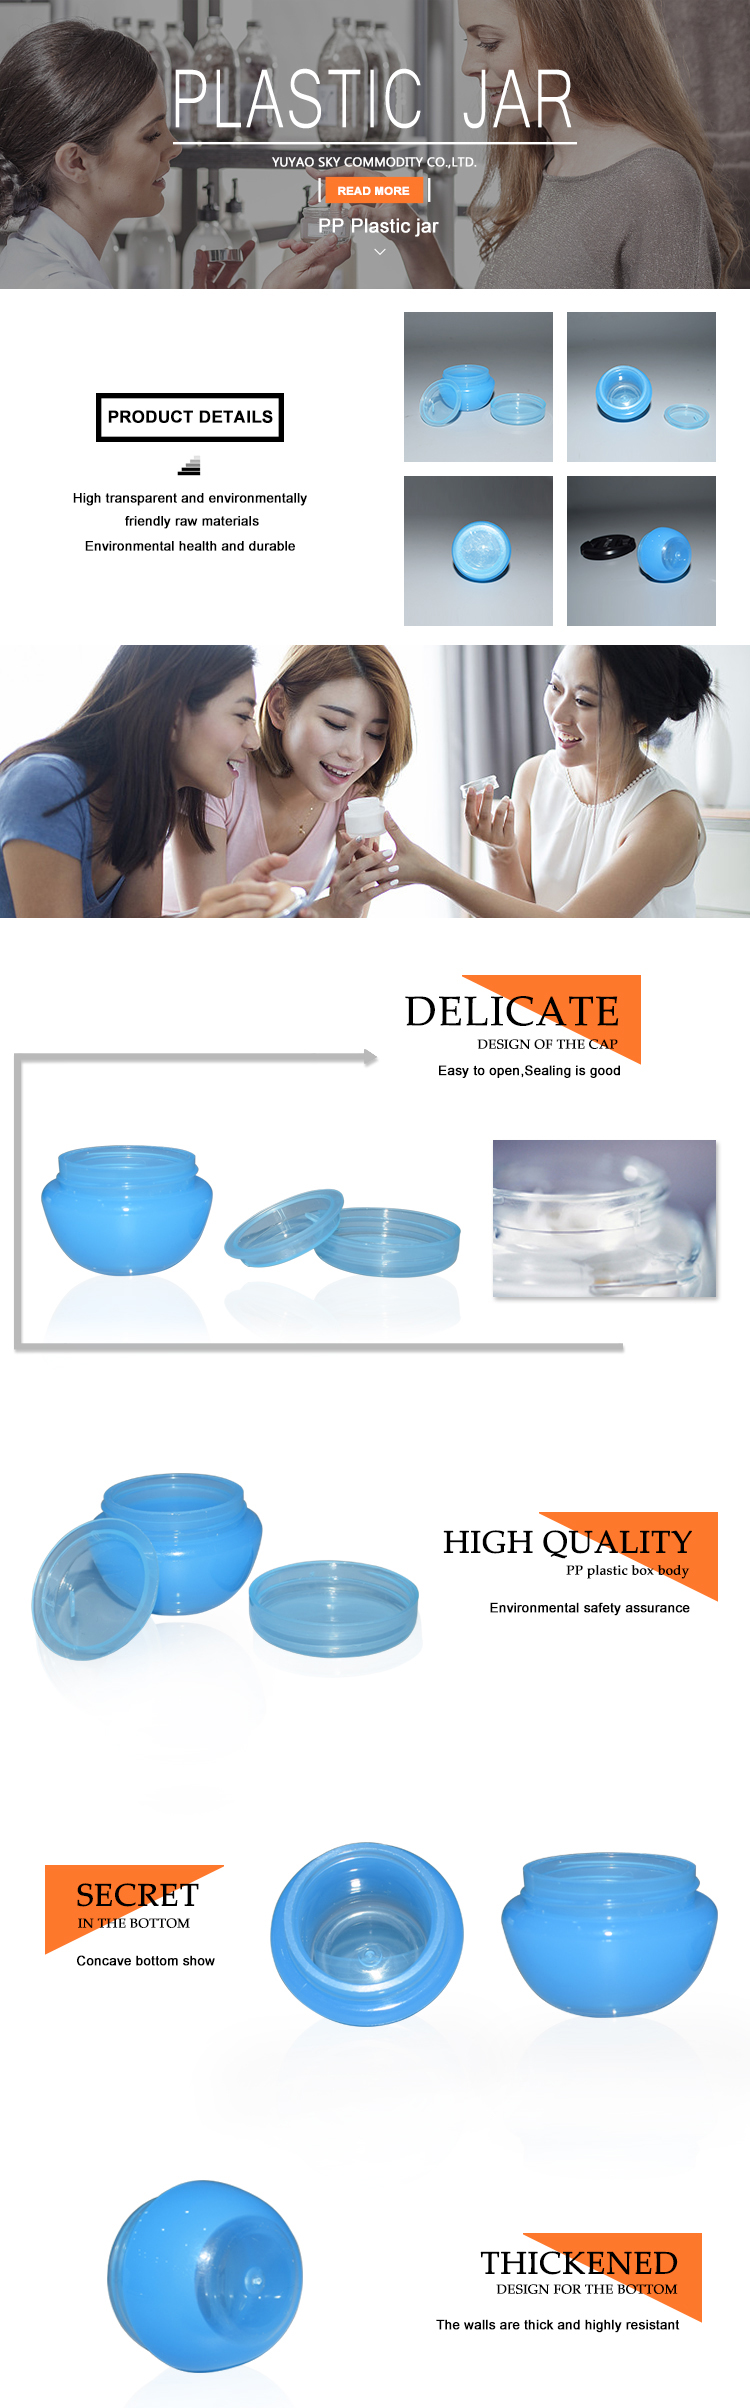 New Design Mini 20ml Clear PP Plastic Cream Jar